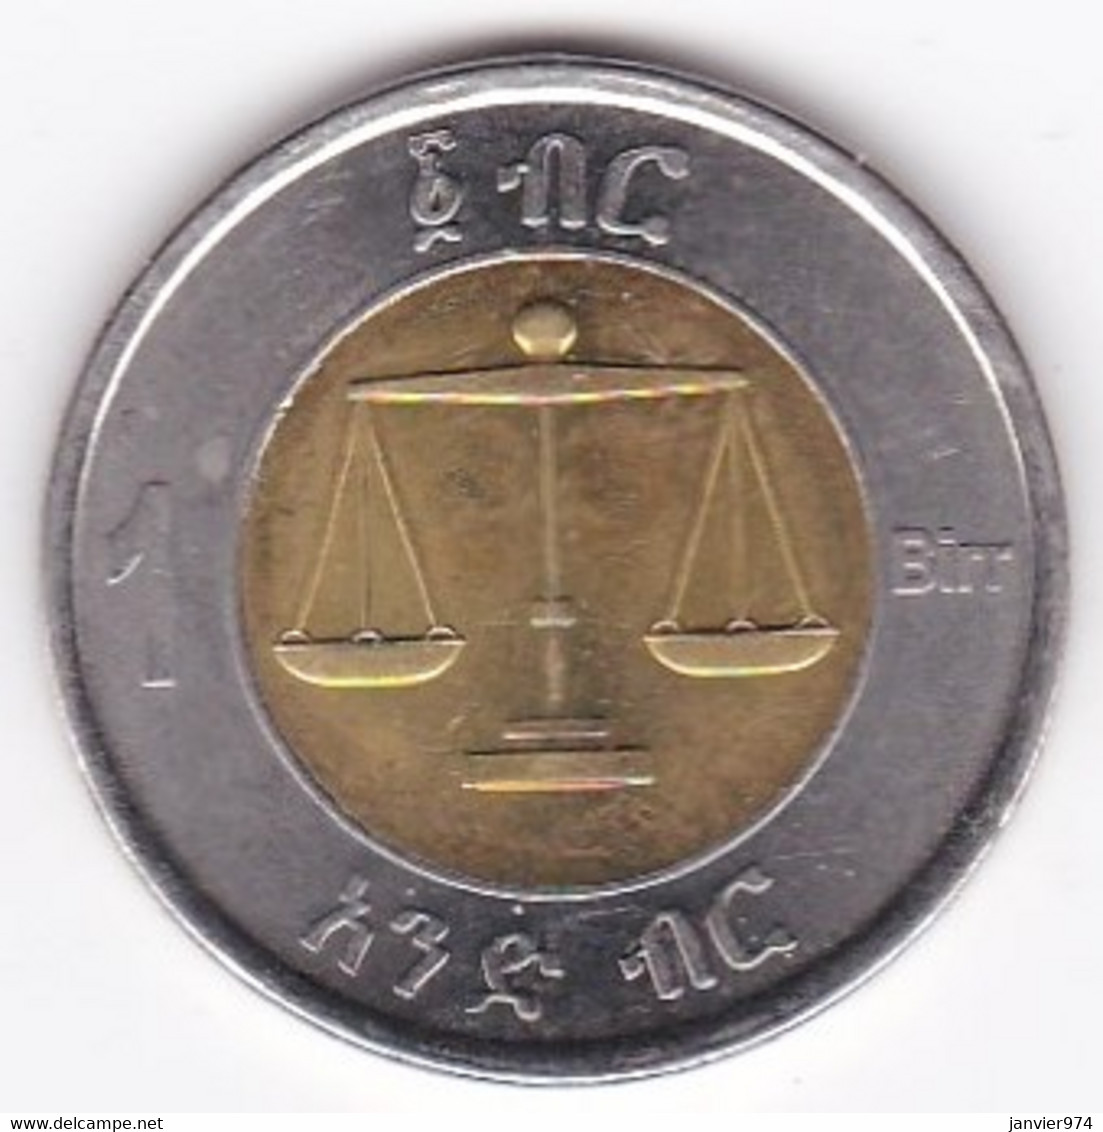 Ethiopie 1 Birr 2002 (2010), Bimétallique , KM # 78 - Ethiopie